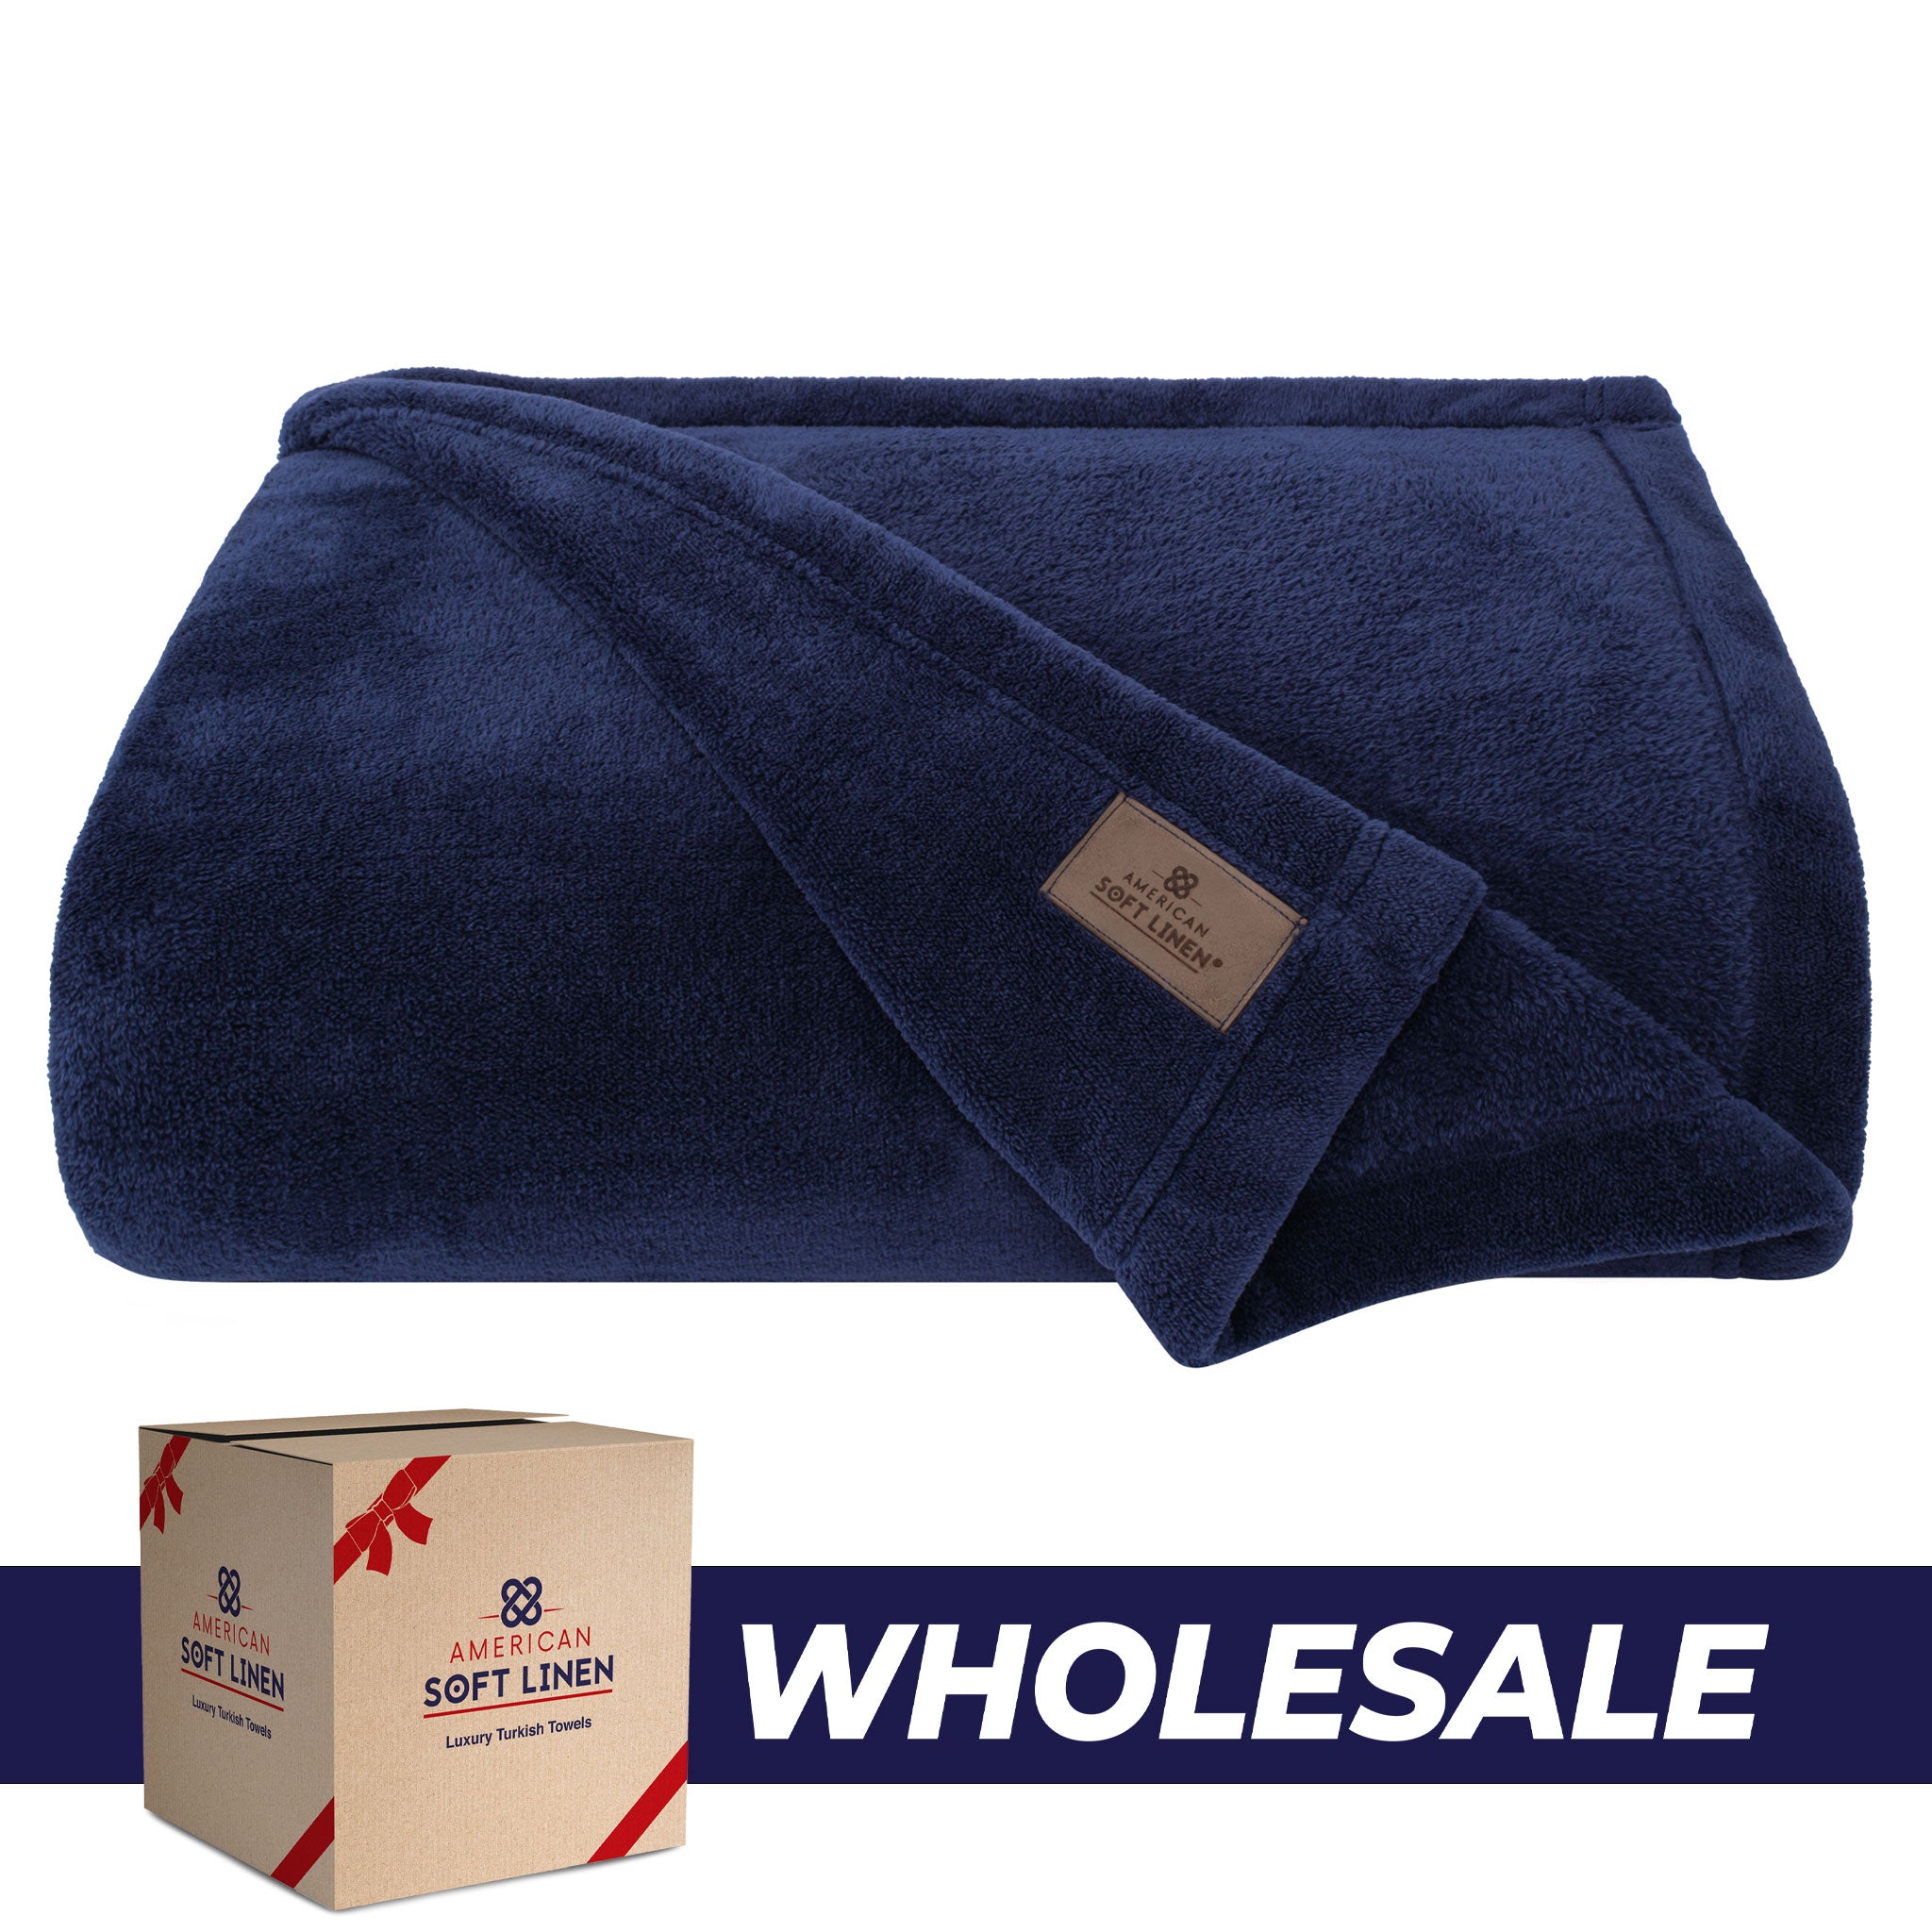 American Soft Linen - Bedding Fleece Blanket - Wholesale - 9 Set Case Pack - Queen Size 85x90 inches - Navy-Blue - 0